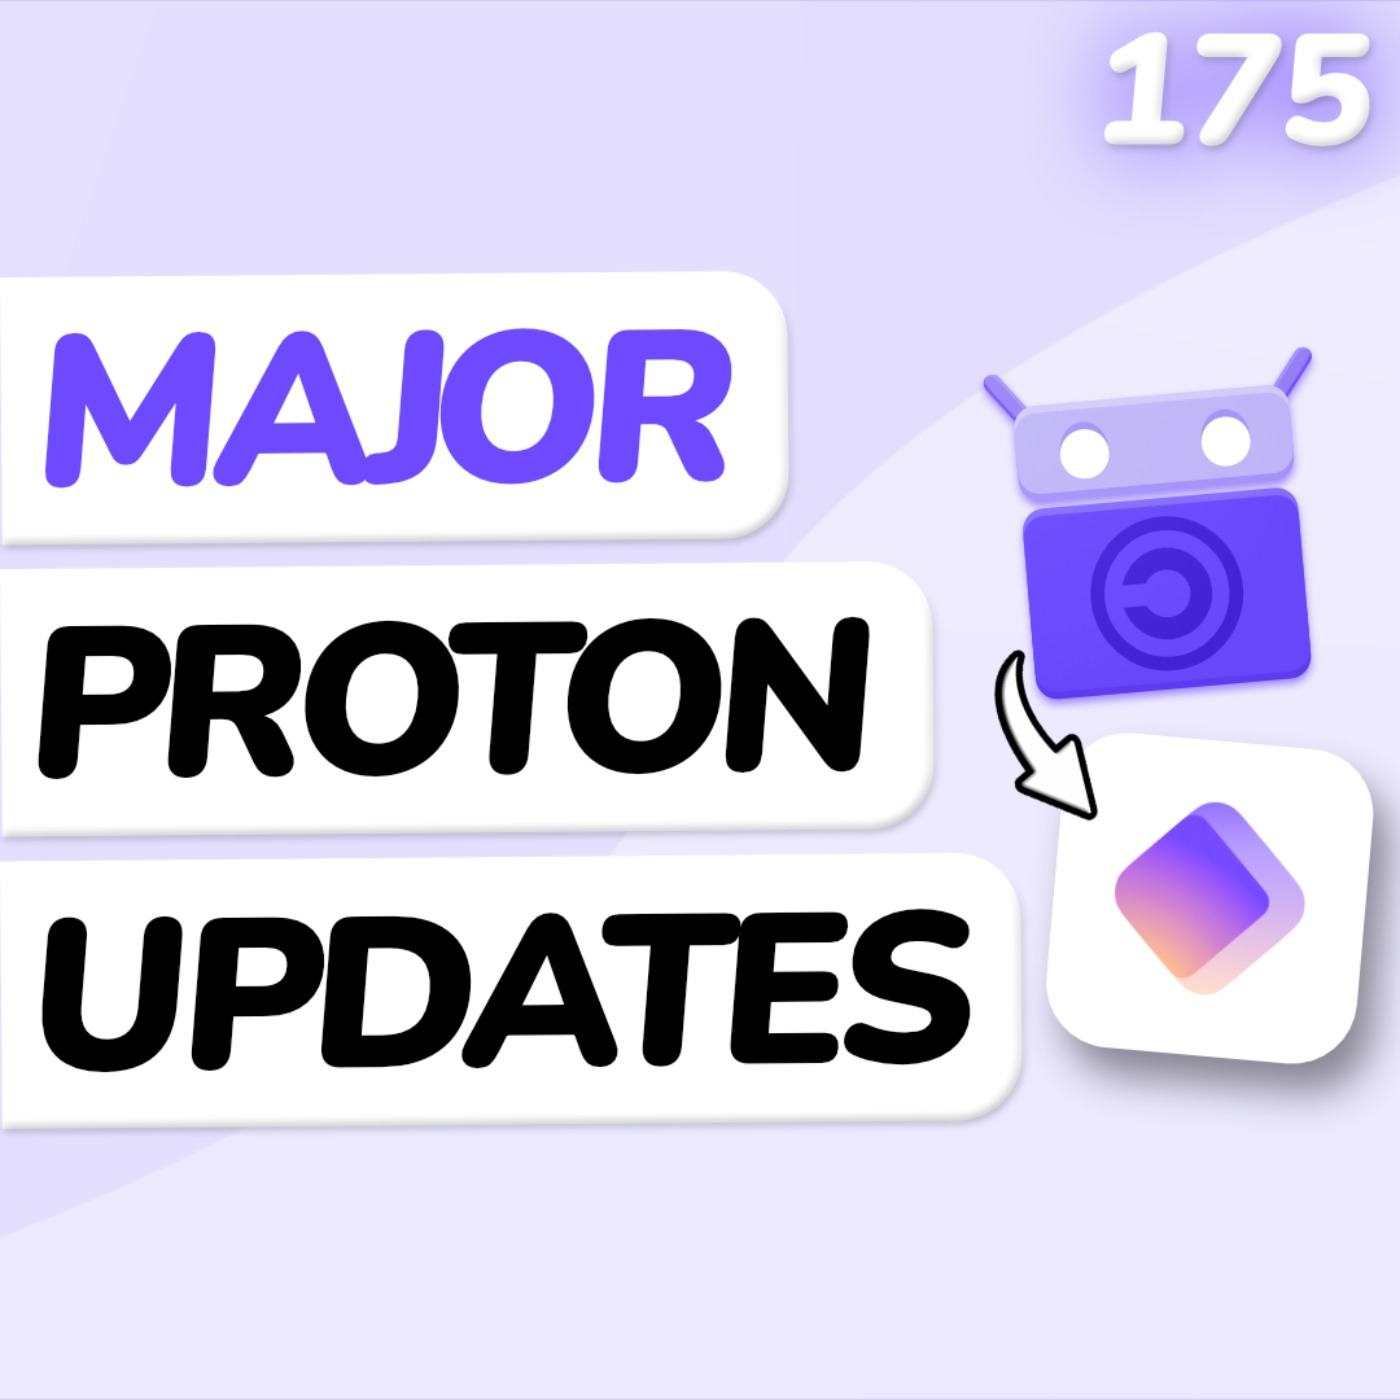 Proton Just Got Even Better!